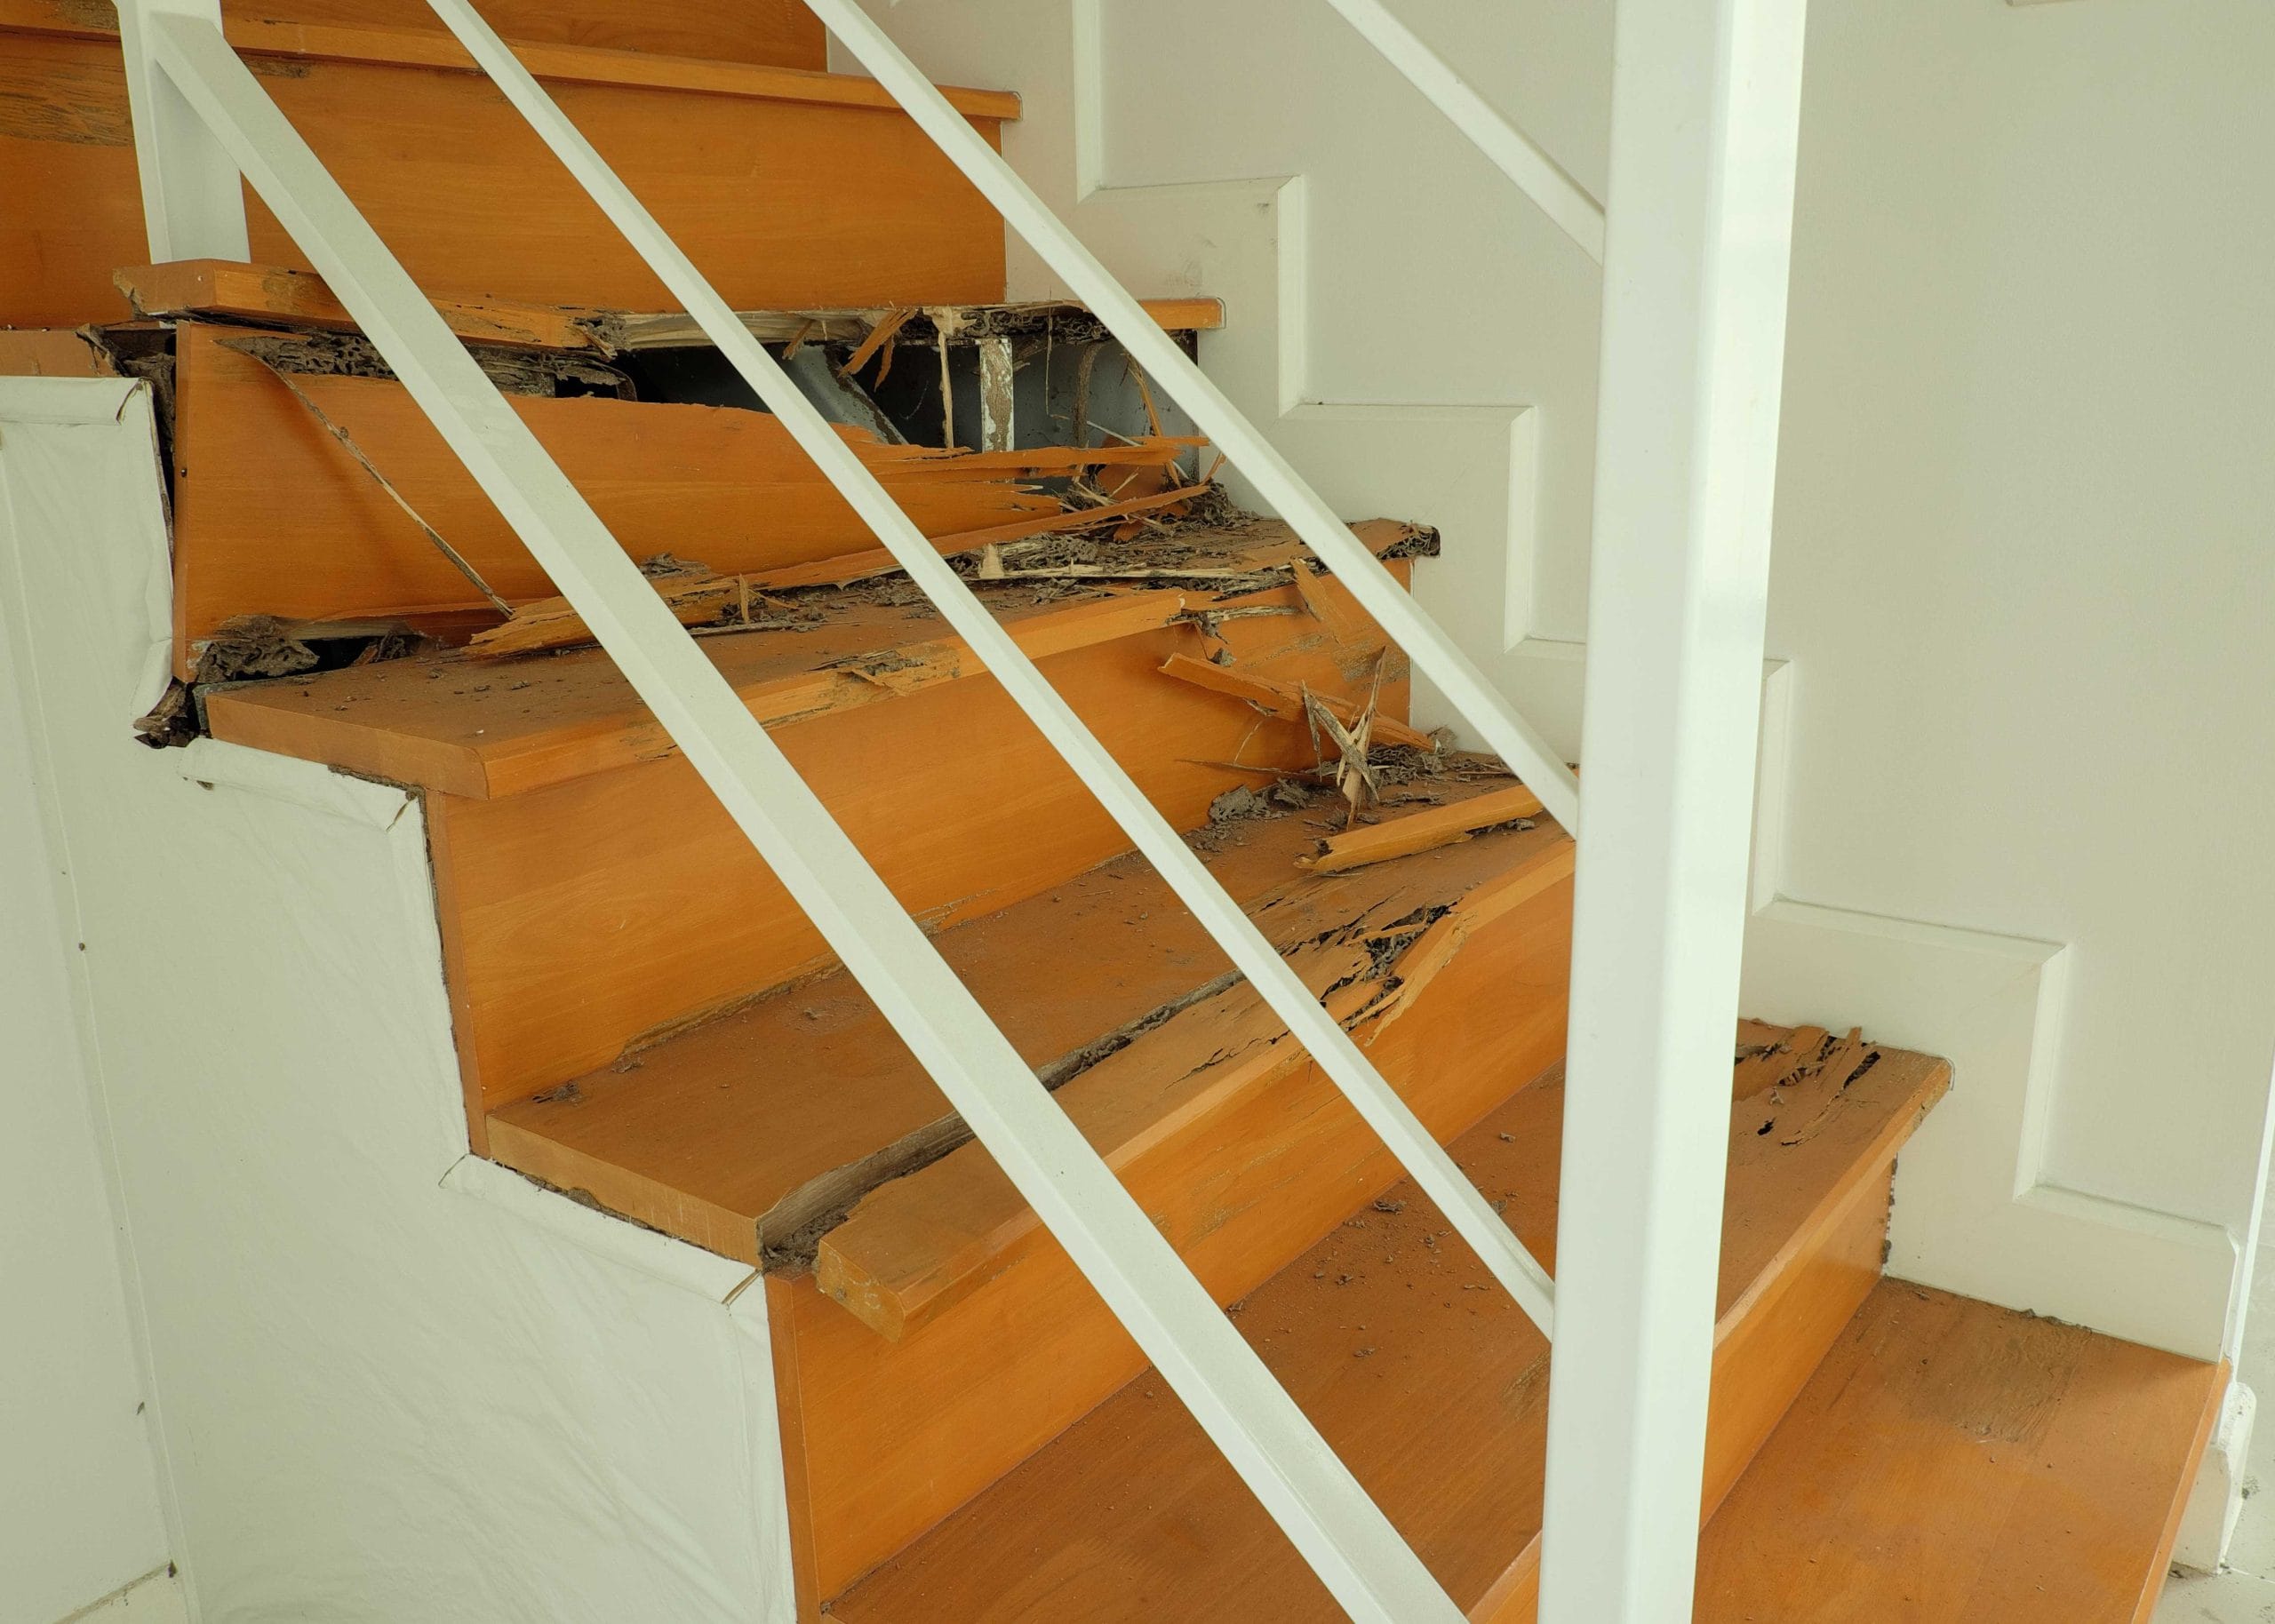 termite-damage-stairs-scaled Miami, Florida